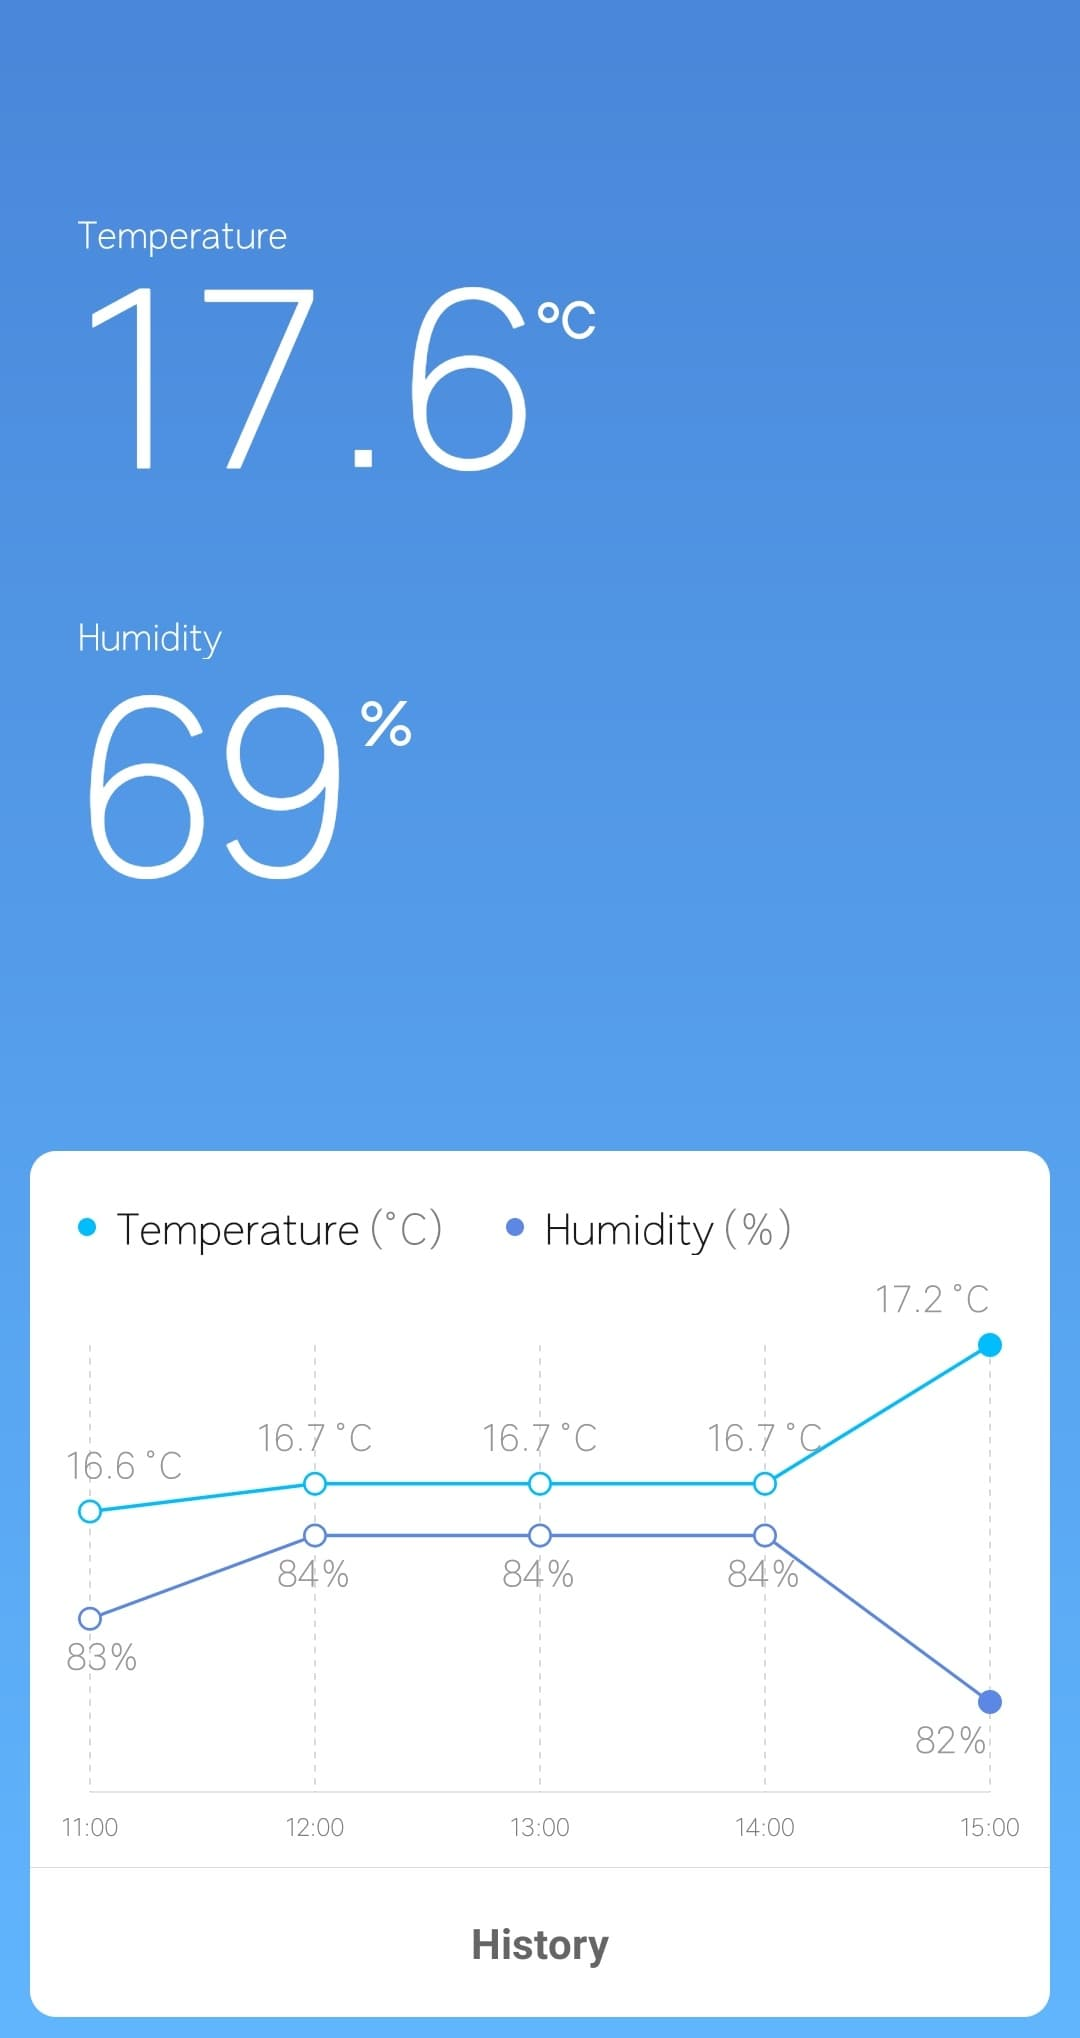 HA] How add Xiaomi Mi Temperature and Humidity Monitor 2 to Home